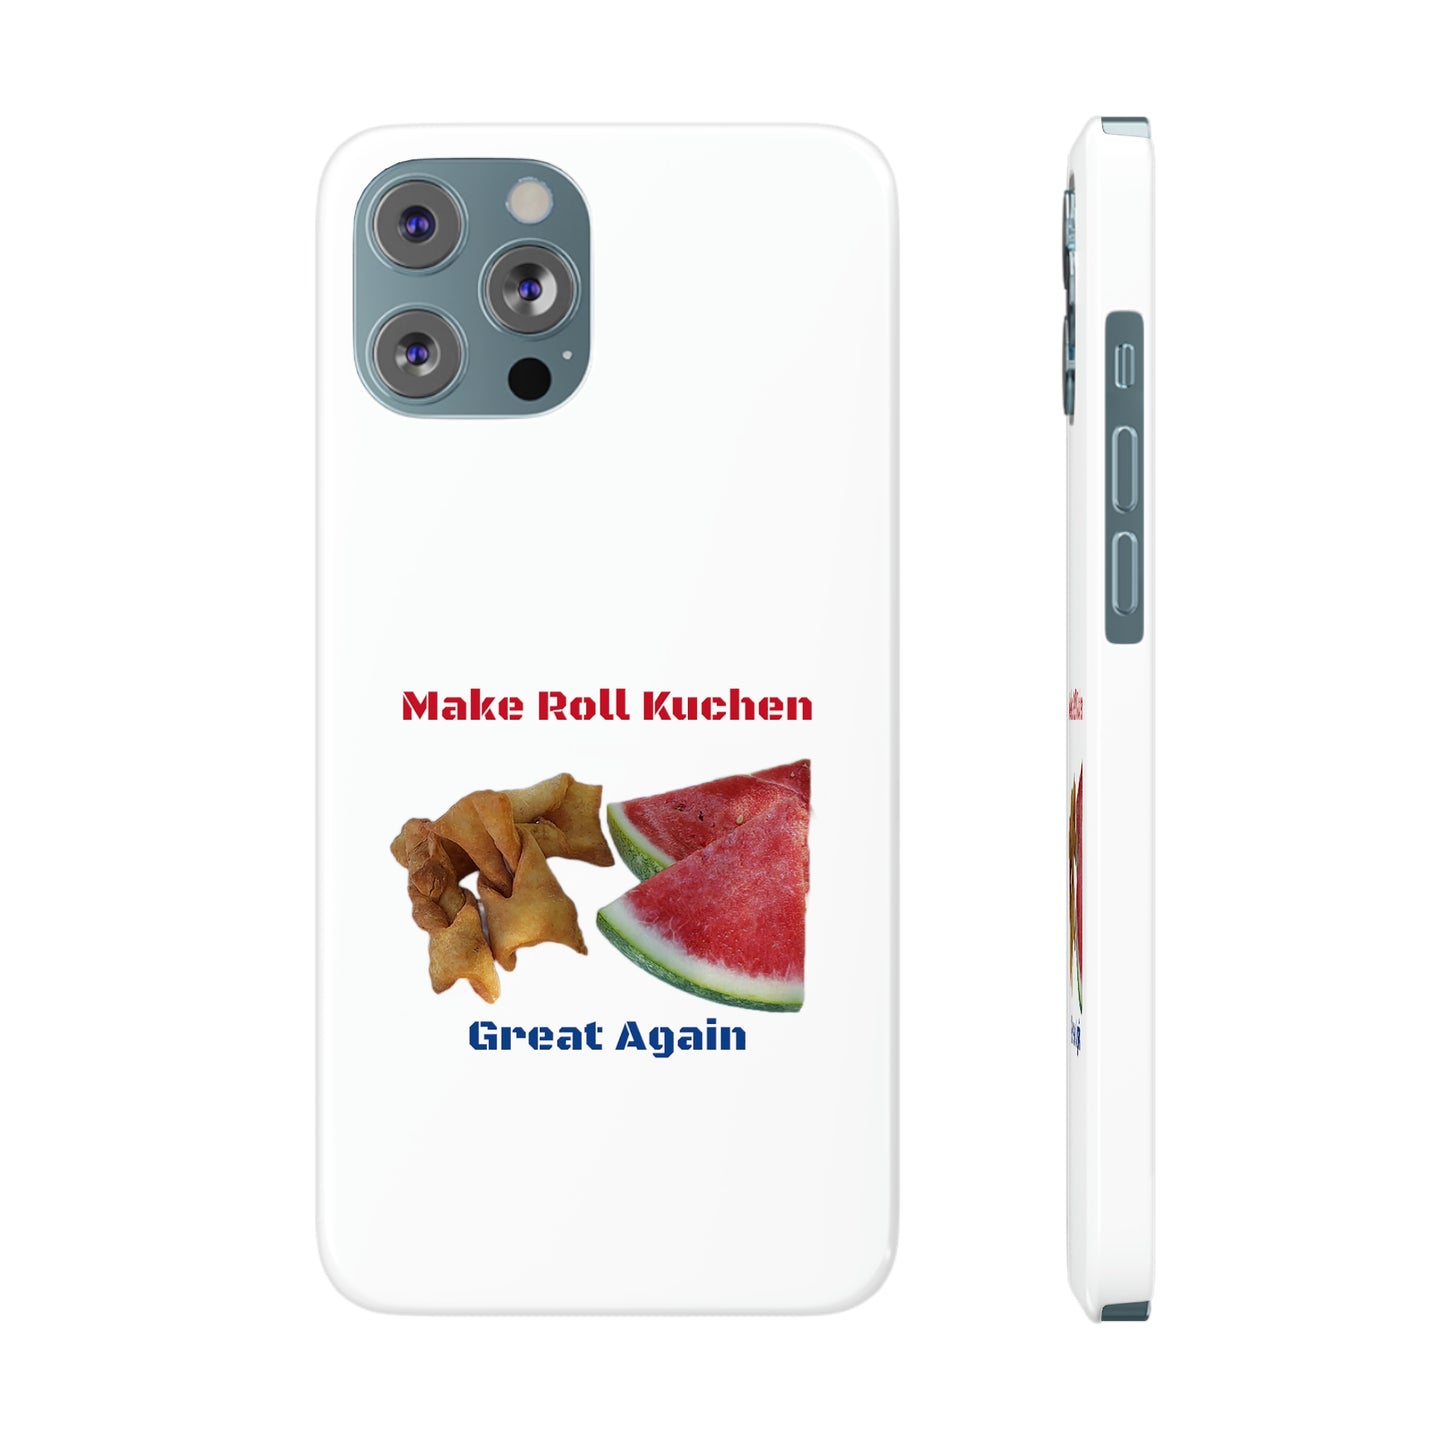 Make Roll Kuchen Great Again iPhone Slim Phone Case